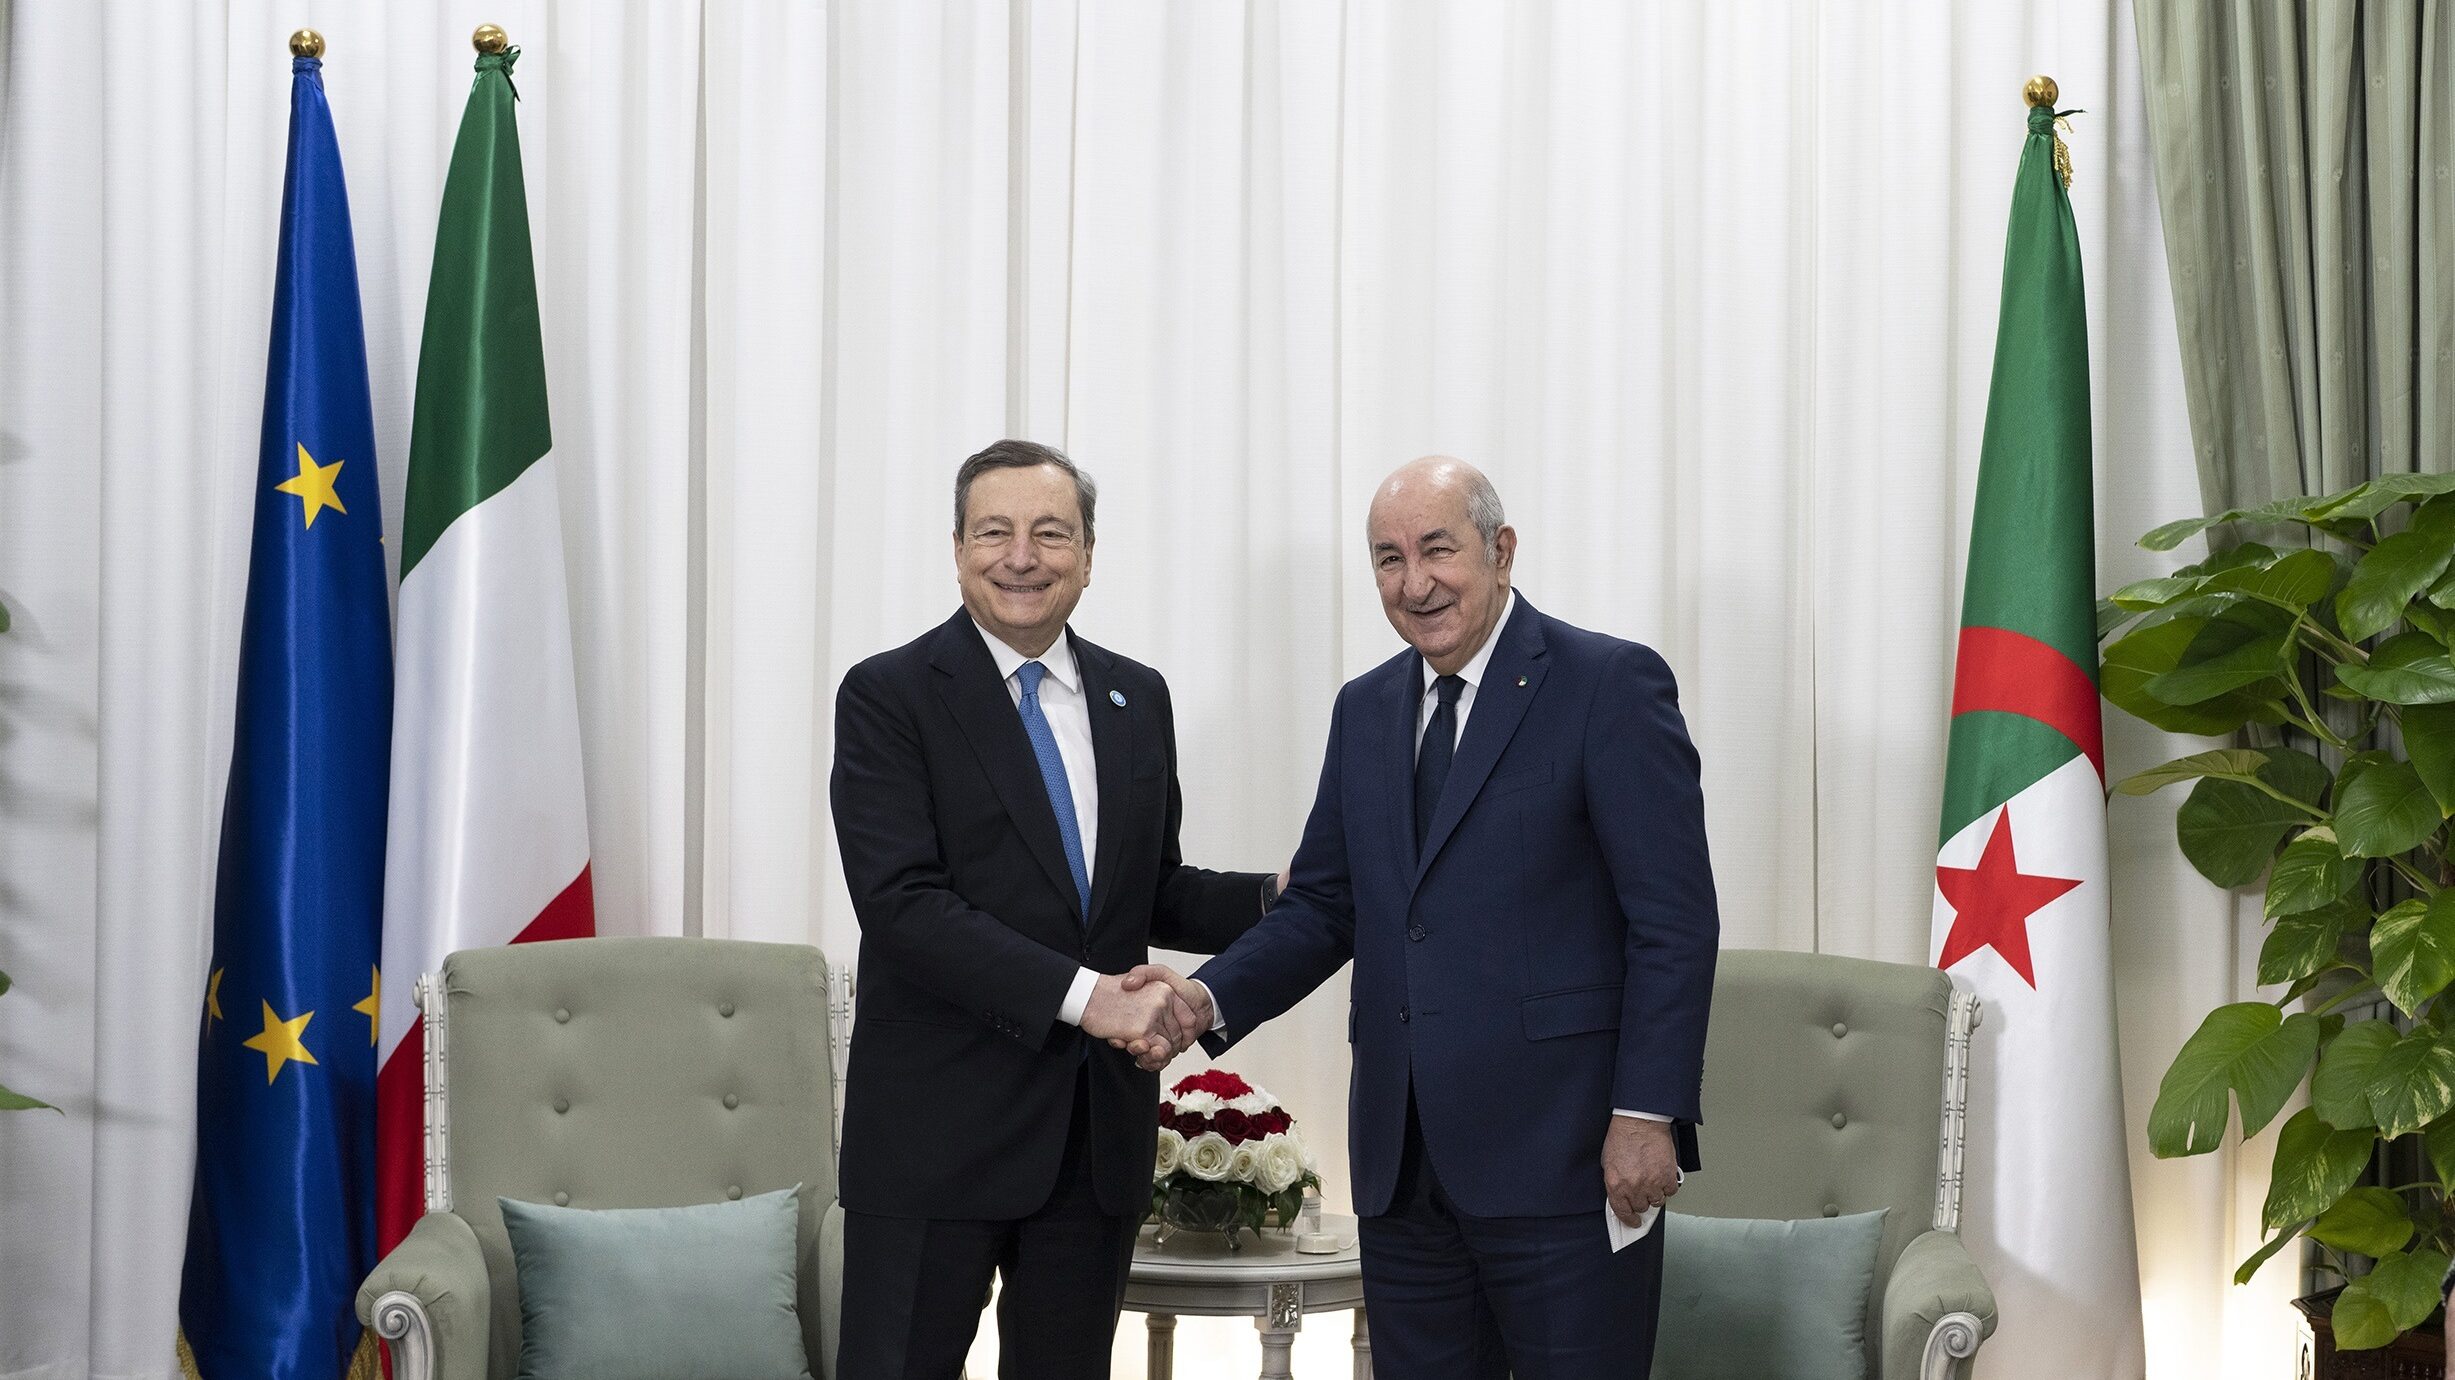 El primer ministro italiano, Mario Draghi, saluda al primer ministro argelino